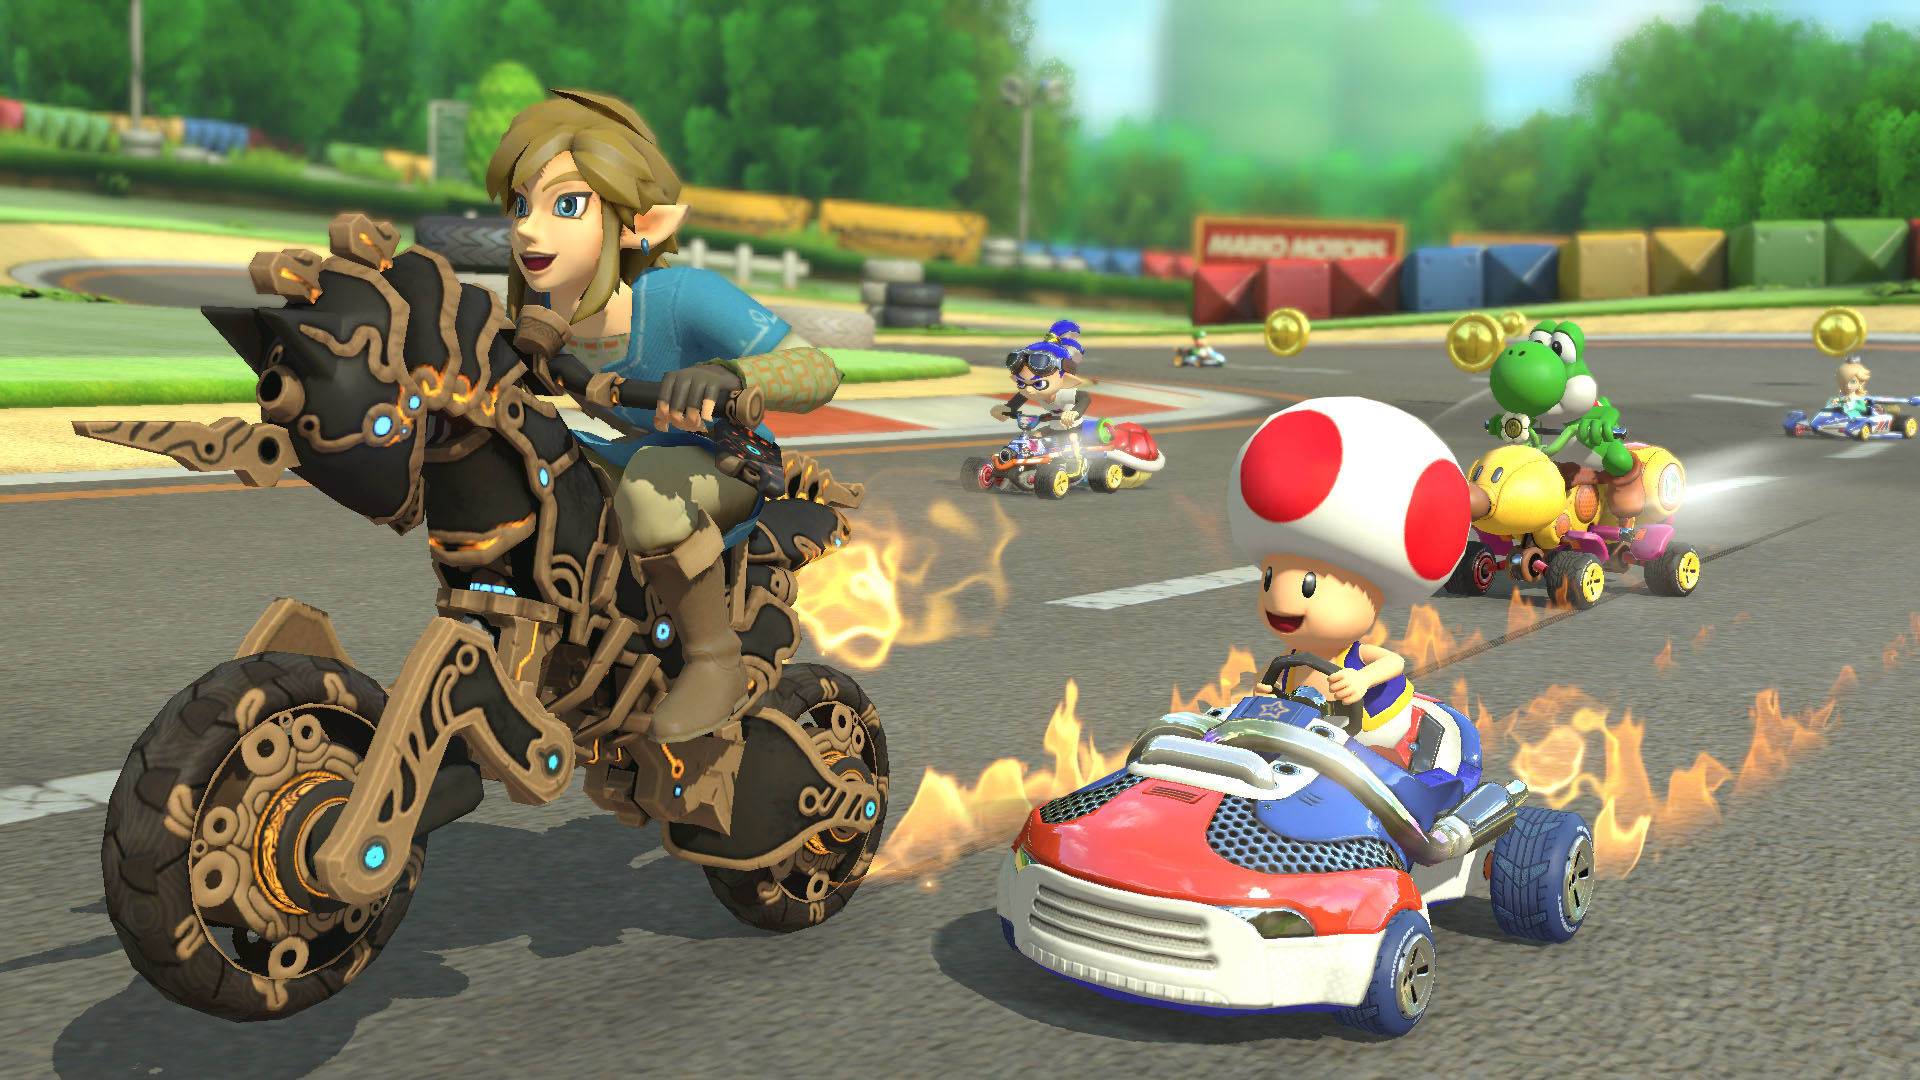 Best Nintendo Switch games: characters drive around in karts in Mario Kart 